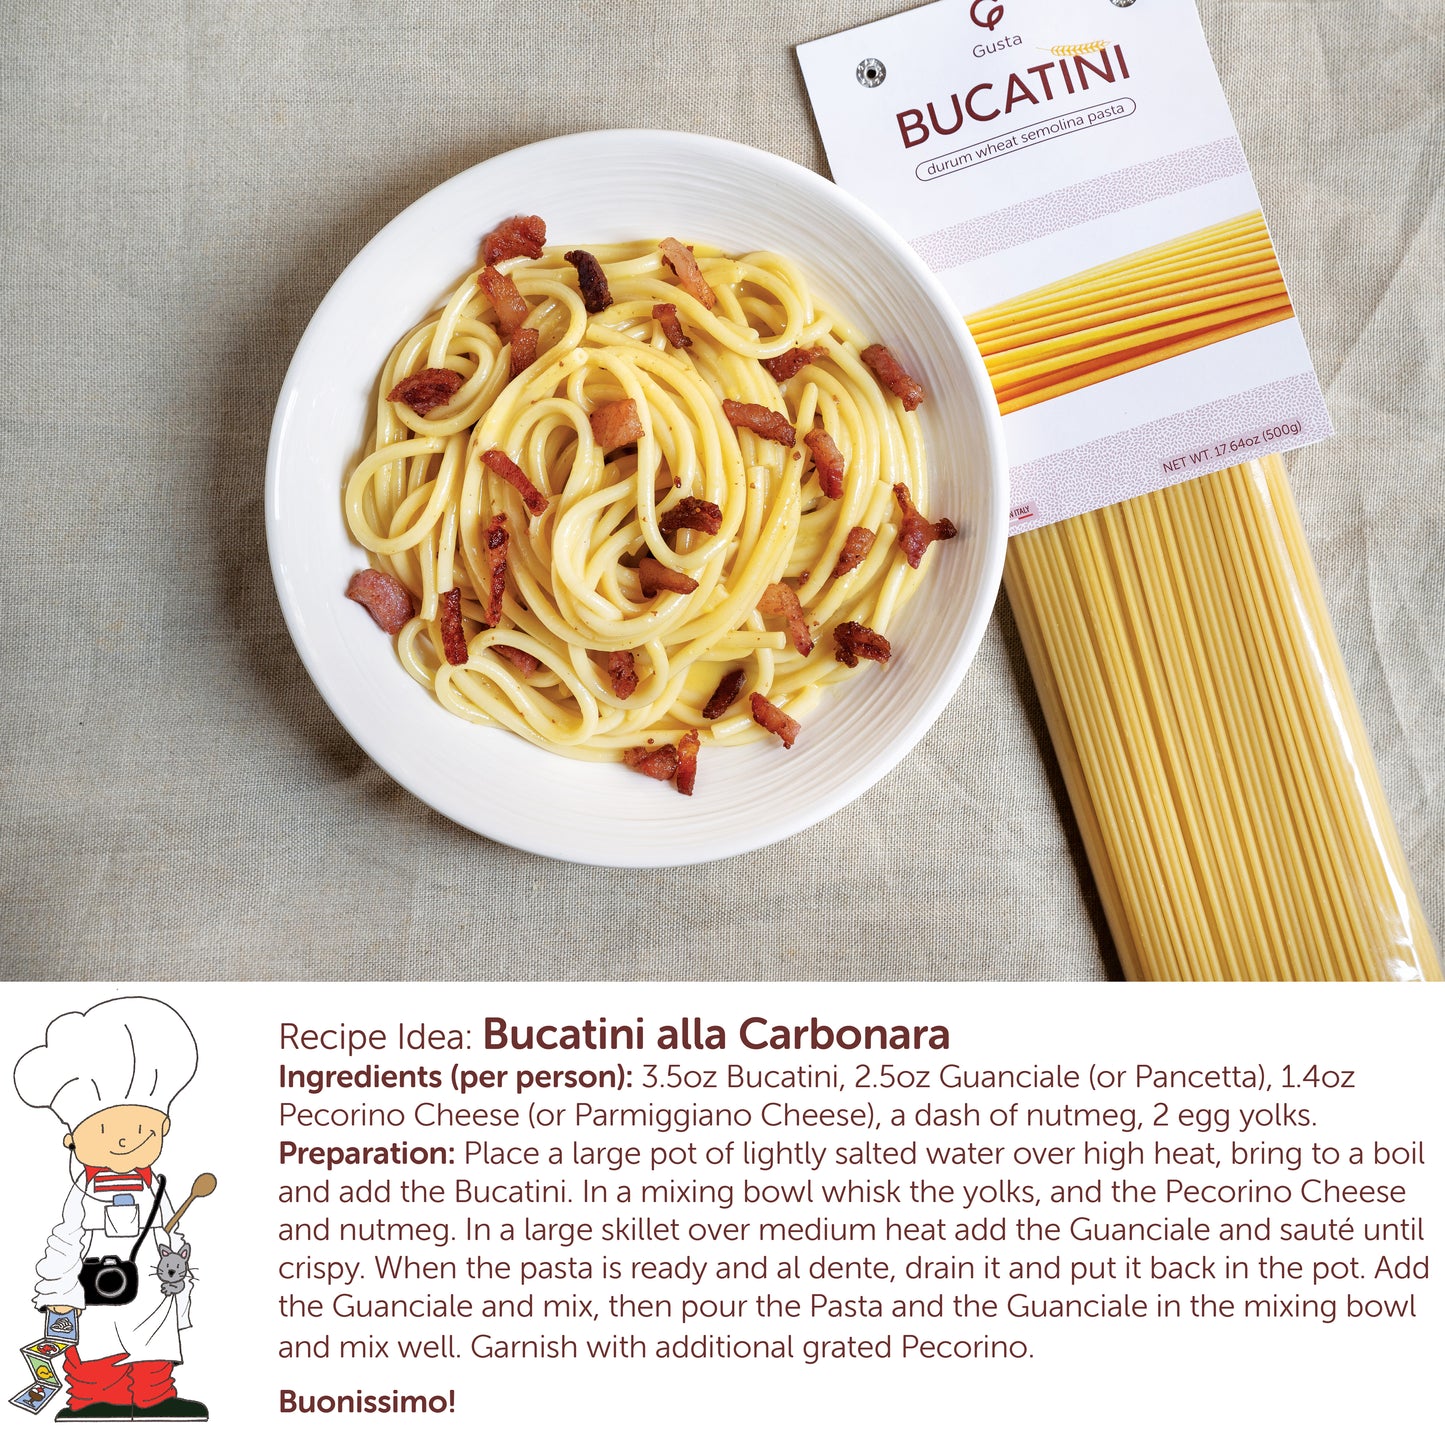 Gusta Bucatini Pasta - USDA Organic - Non-GMO Durum Wheat Semolina